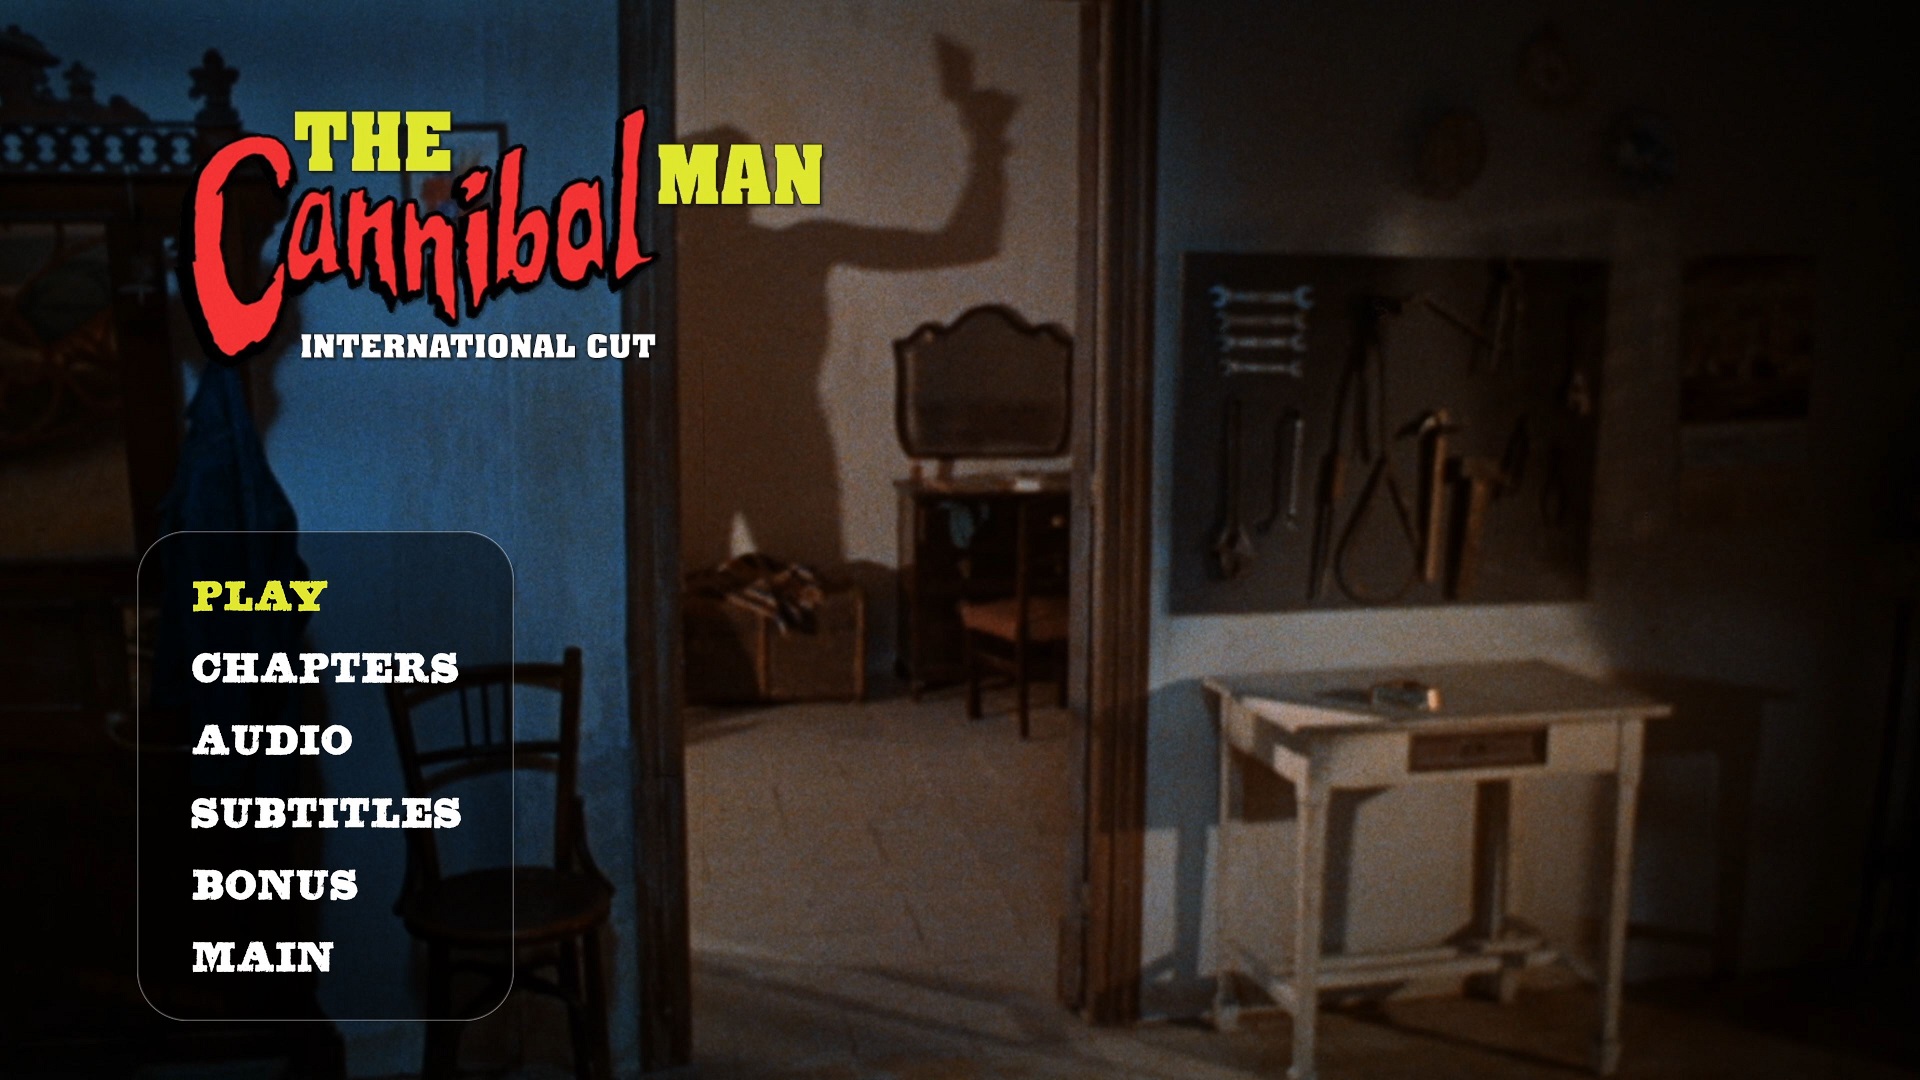 Cannibal Man International Cut Blu-ray Menu